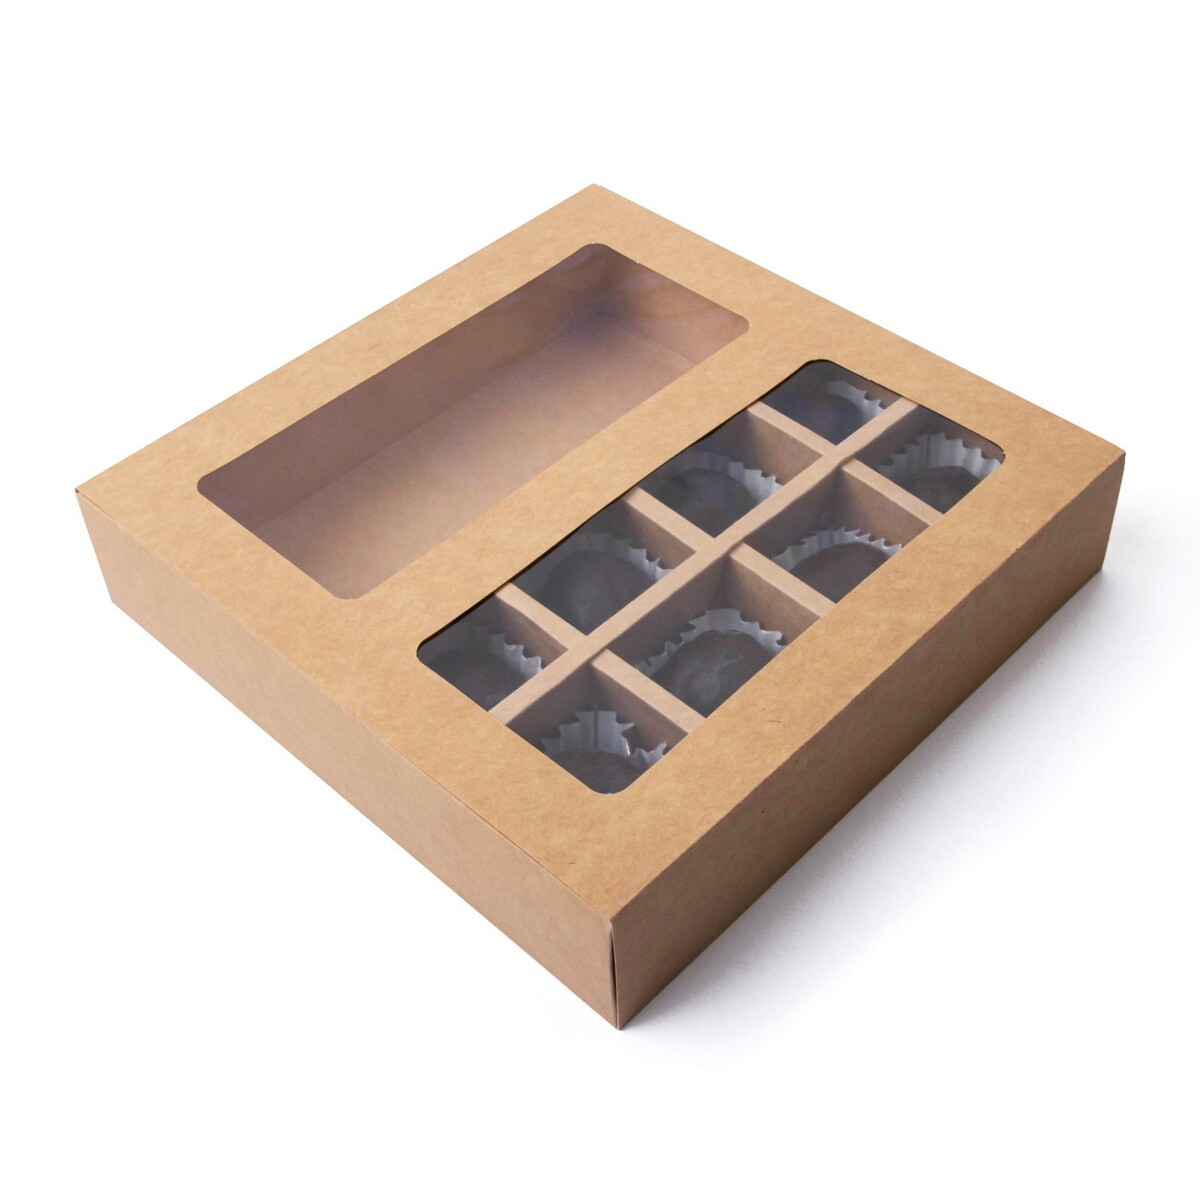 Коробка складная под 8 конфет + шоколад, крафт, 17,7 х 17,8 х 3,8 см коробка под 8 конфет шоколад с окном сиреневая 17 7 х 17 7 х 3 8 см